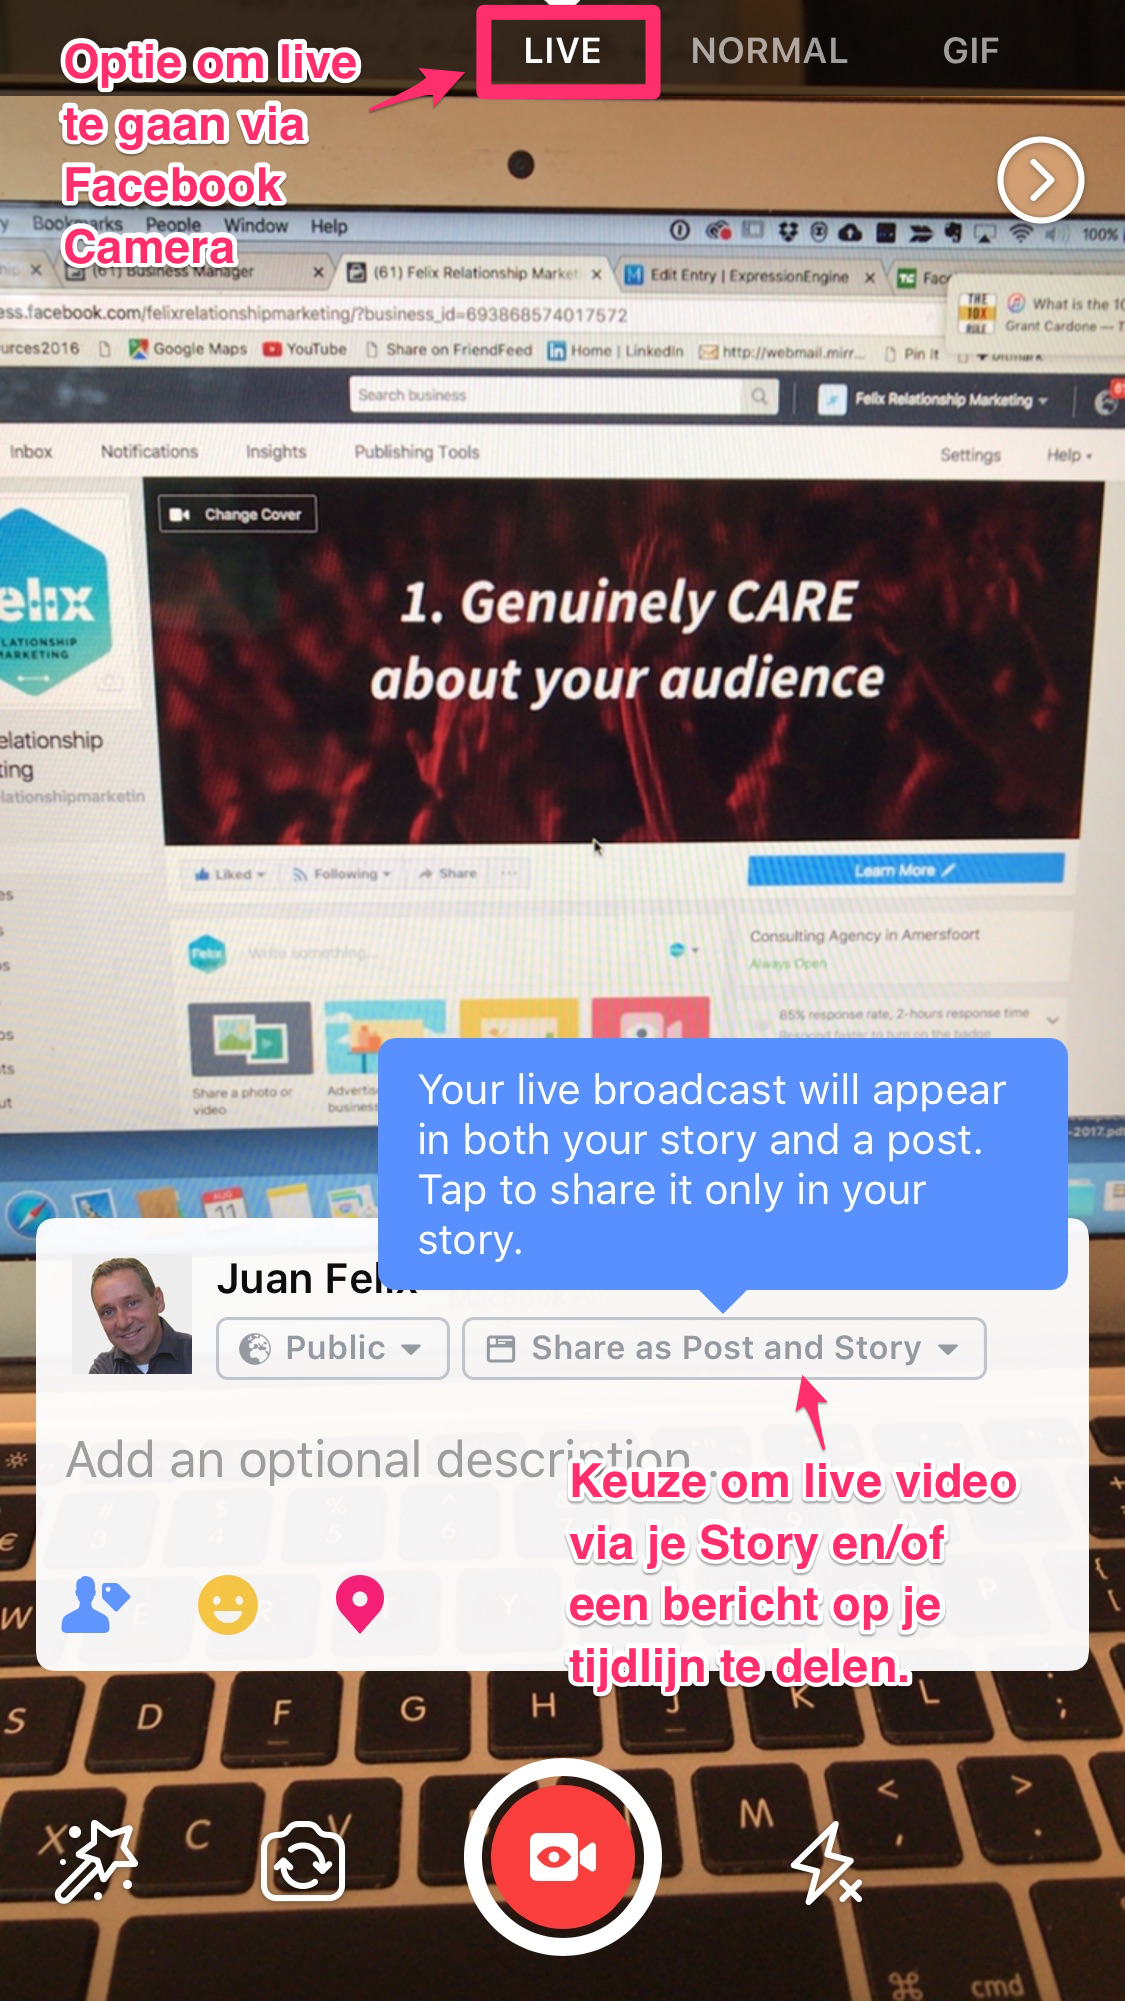 Facebook live broadcast via Camera